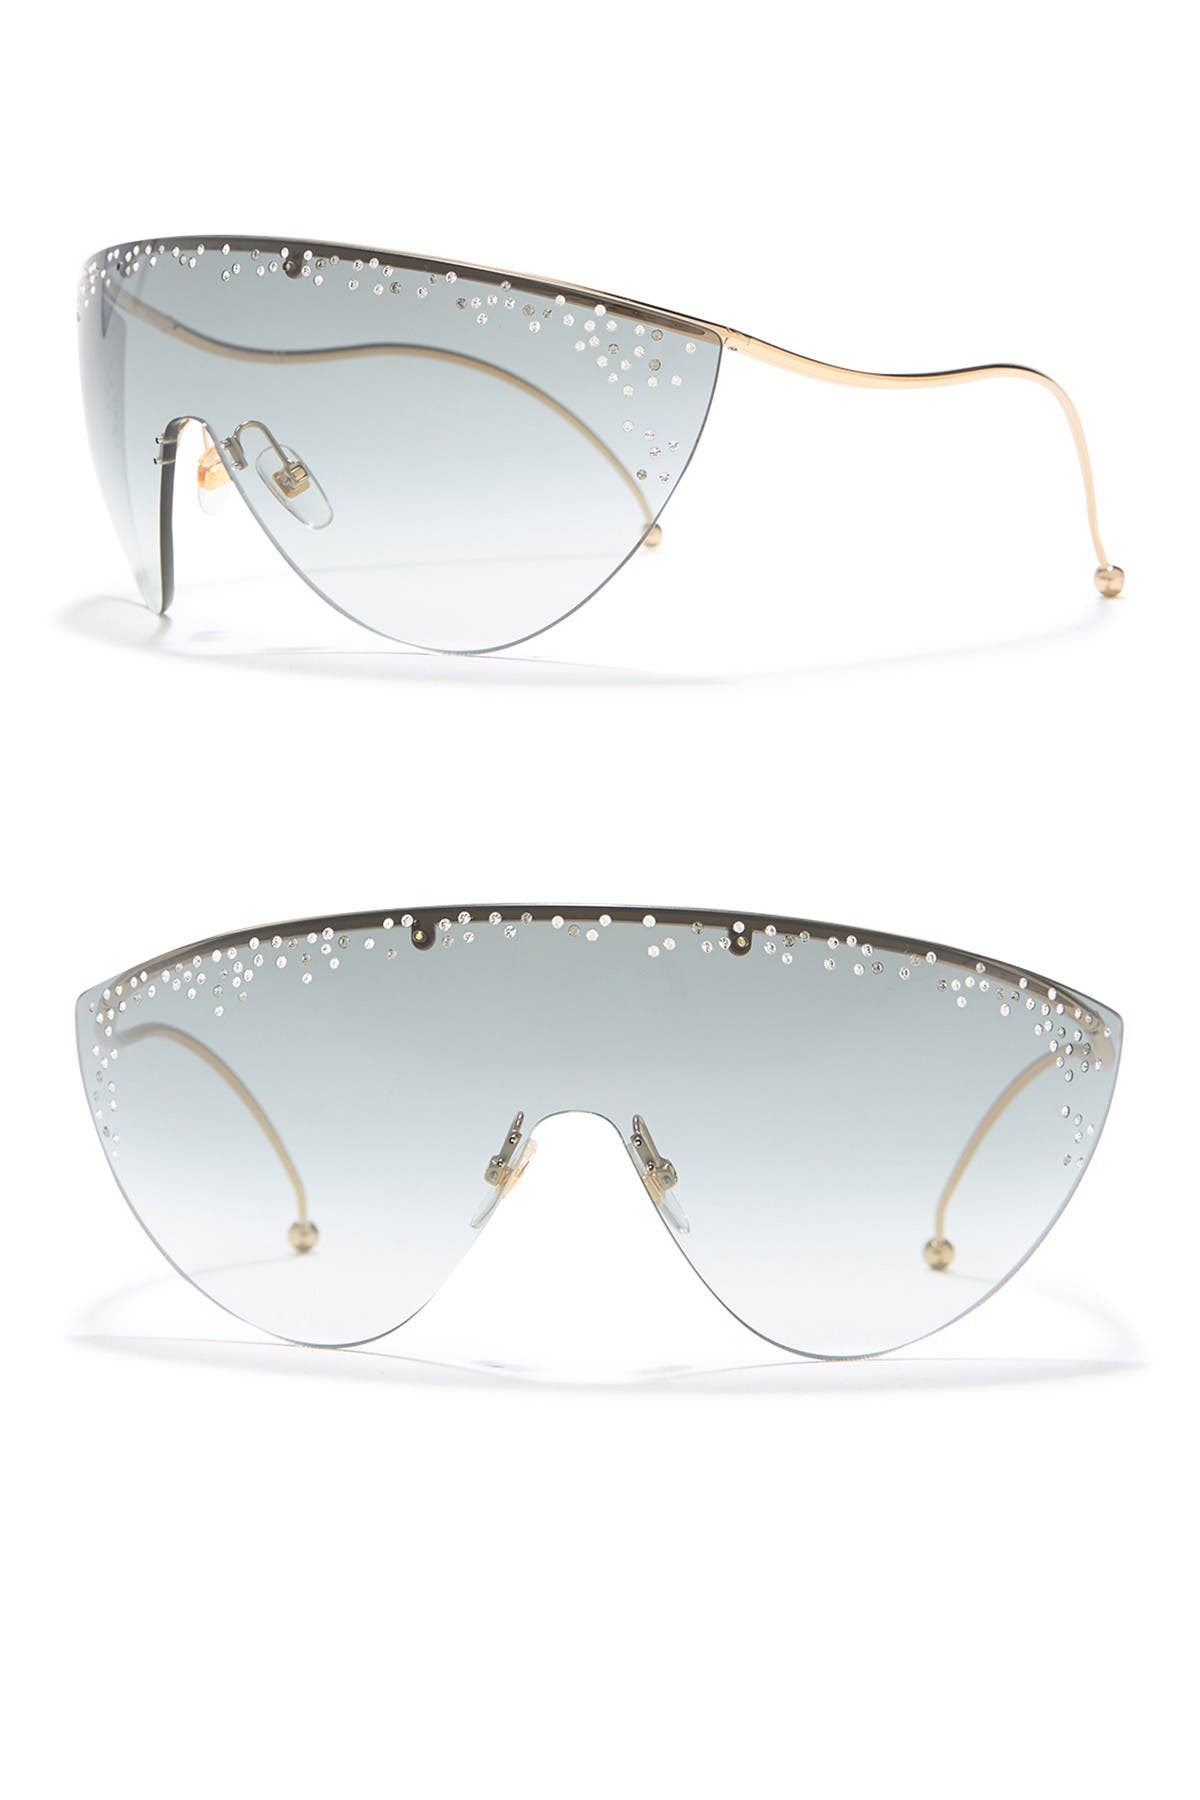 Givenchy | Shield Sunglasses 